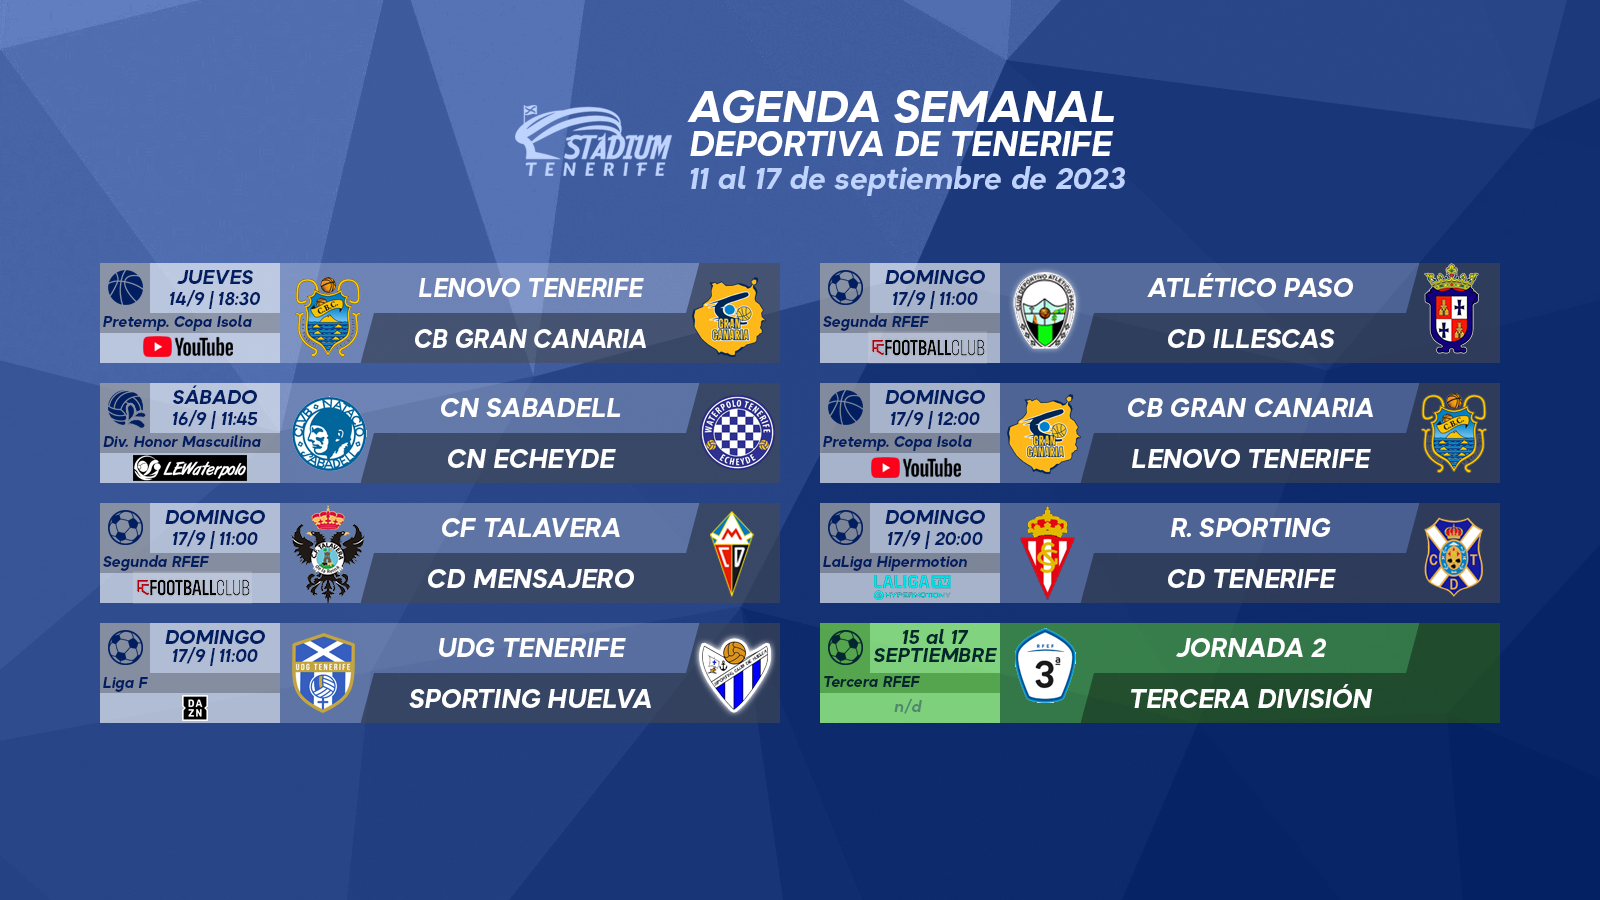 Agenda Semanal Deportiva de Tenerife (11 al 17 de septiembre)